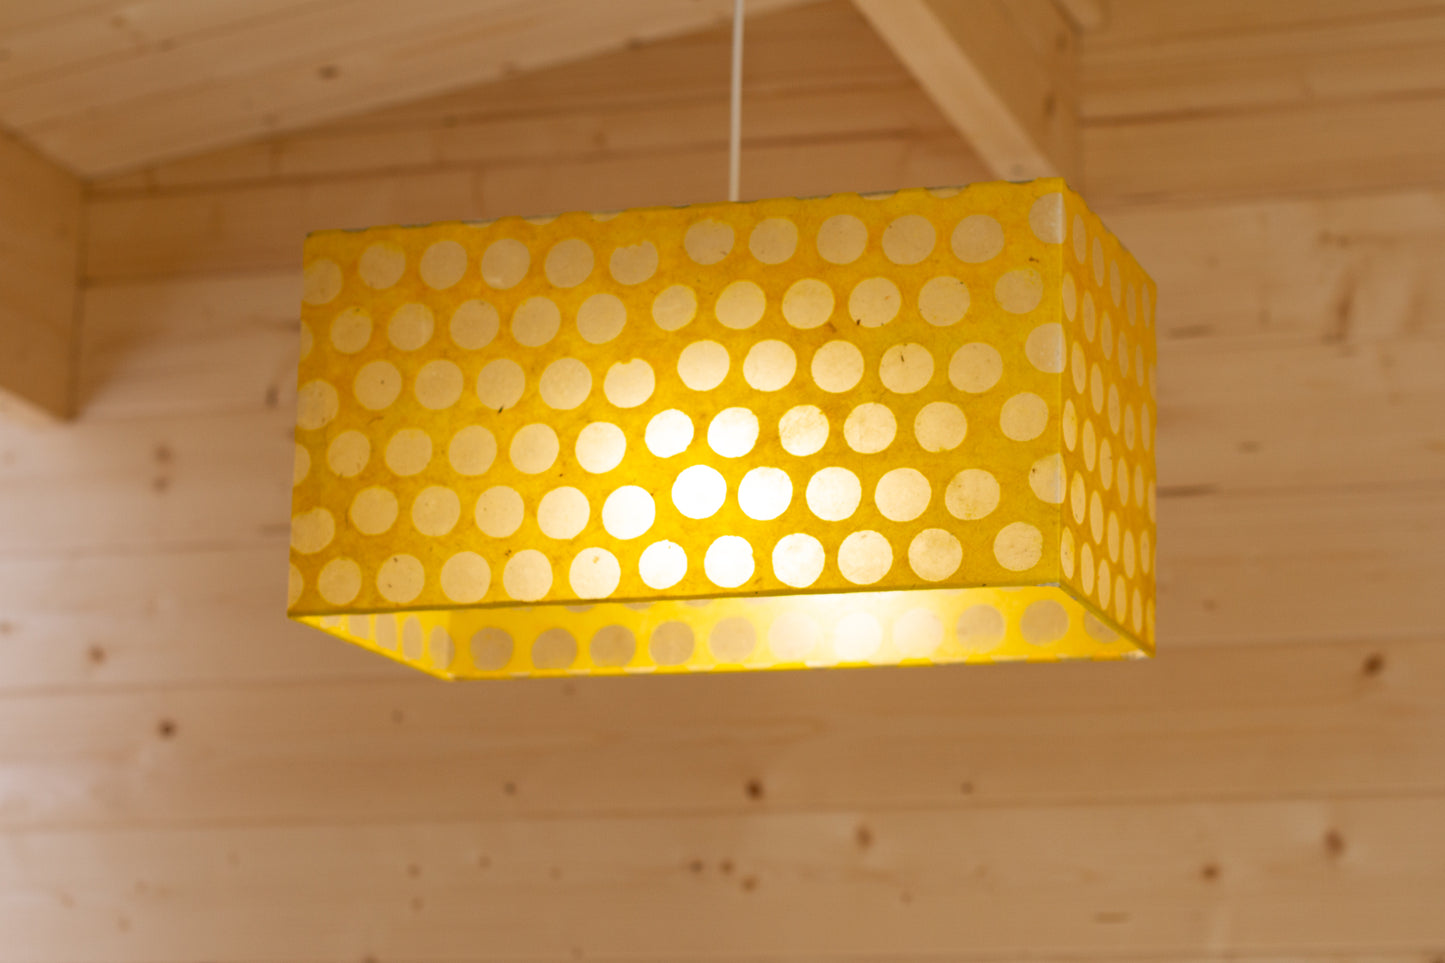 Rectangle Lamp Shade - P86 ~ Batik Dots on Yellow, 40cm(w) x 20cm(h) x 20cm(d)